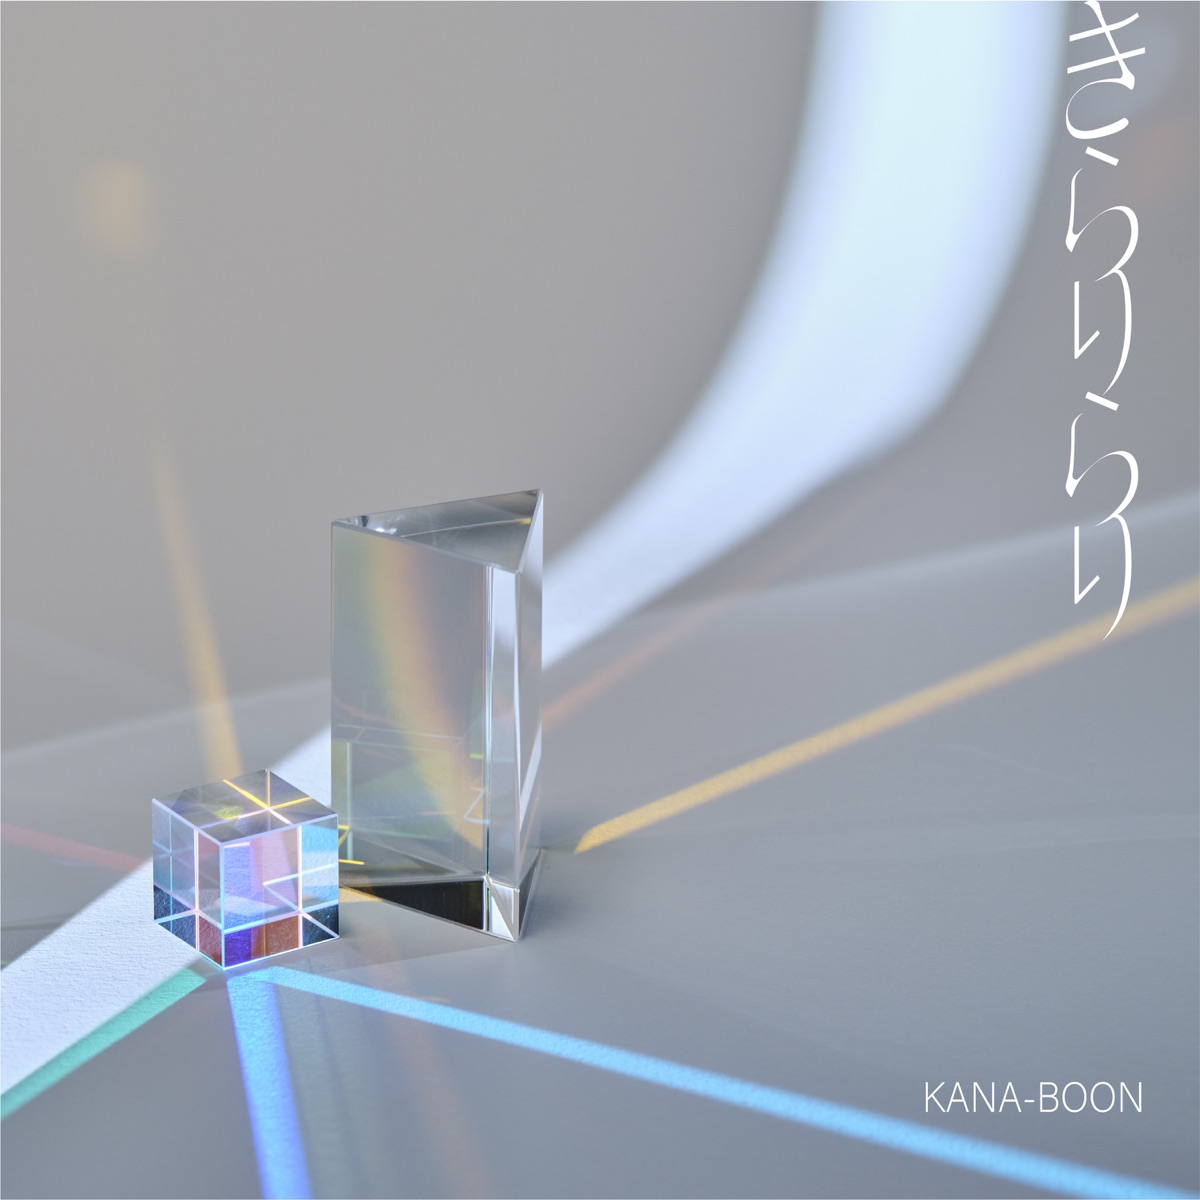 Cover art for『KANA-BOON - Makafushigi』from the release『Kirarirari』